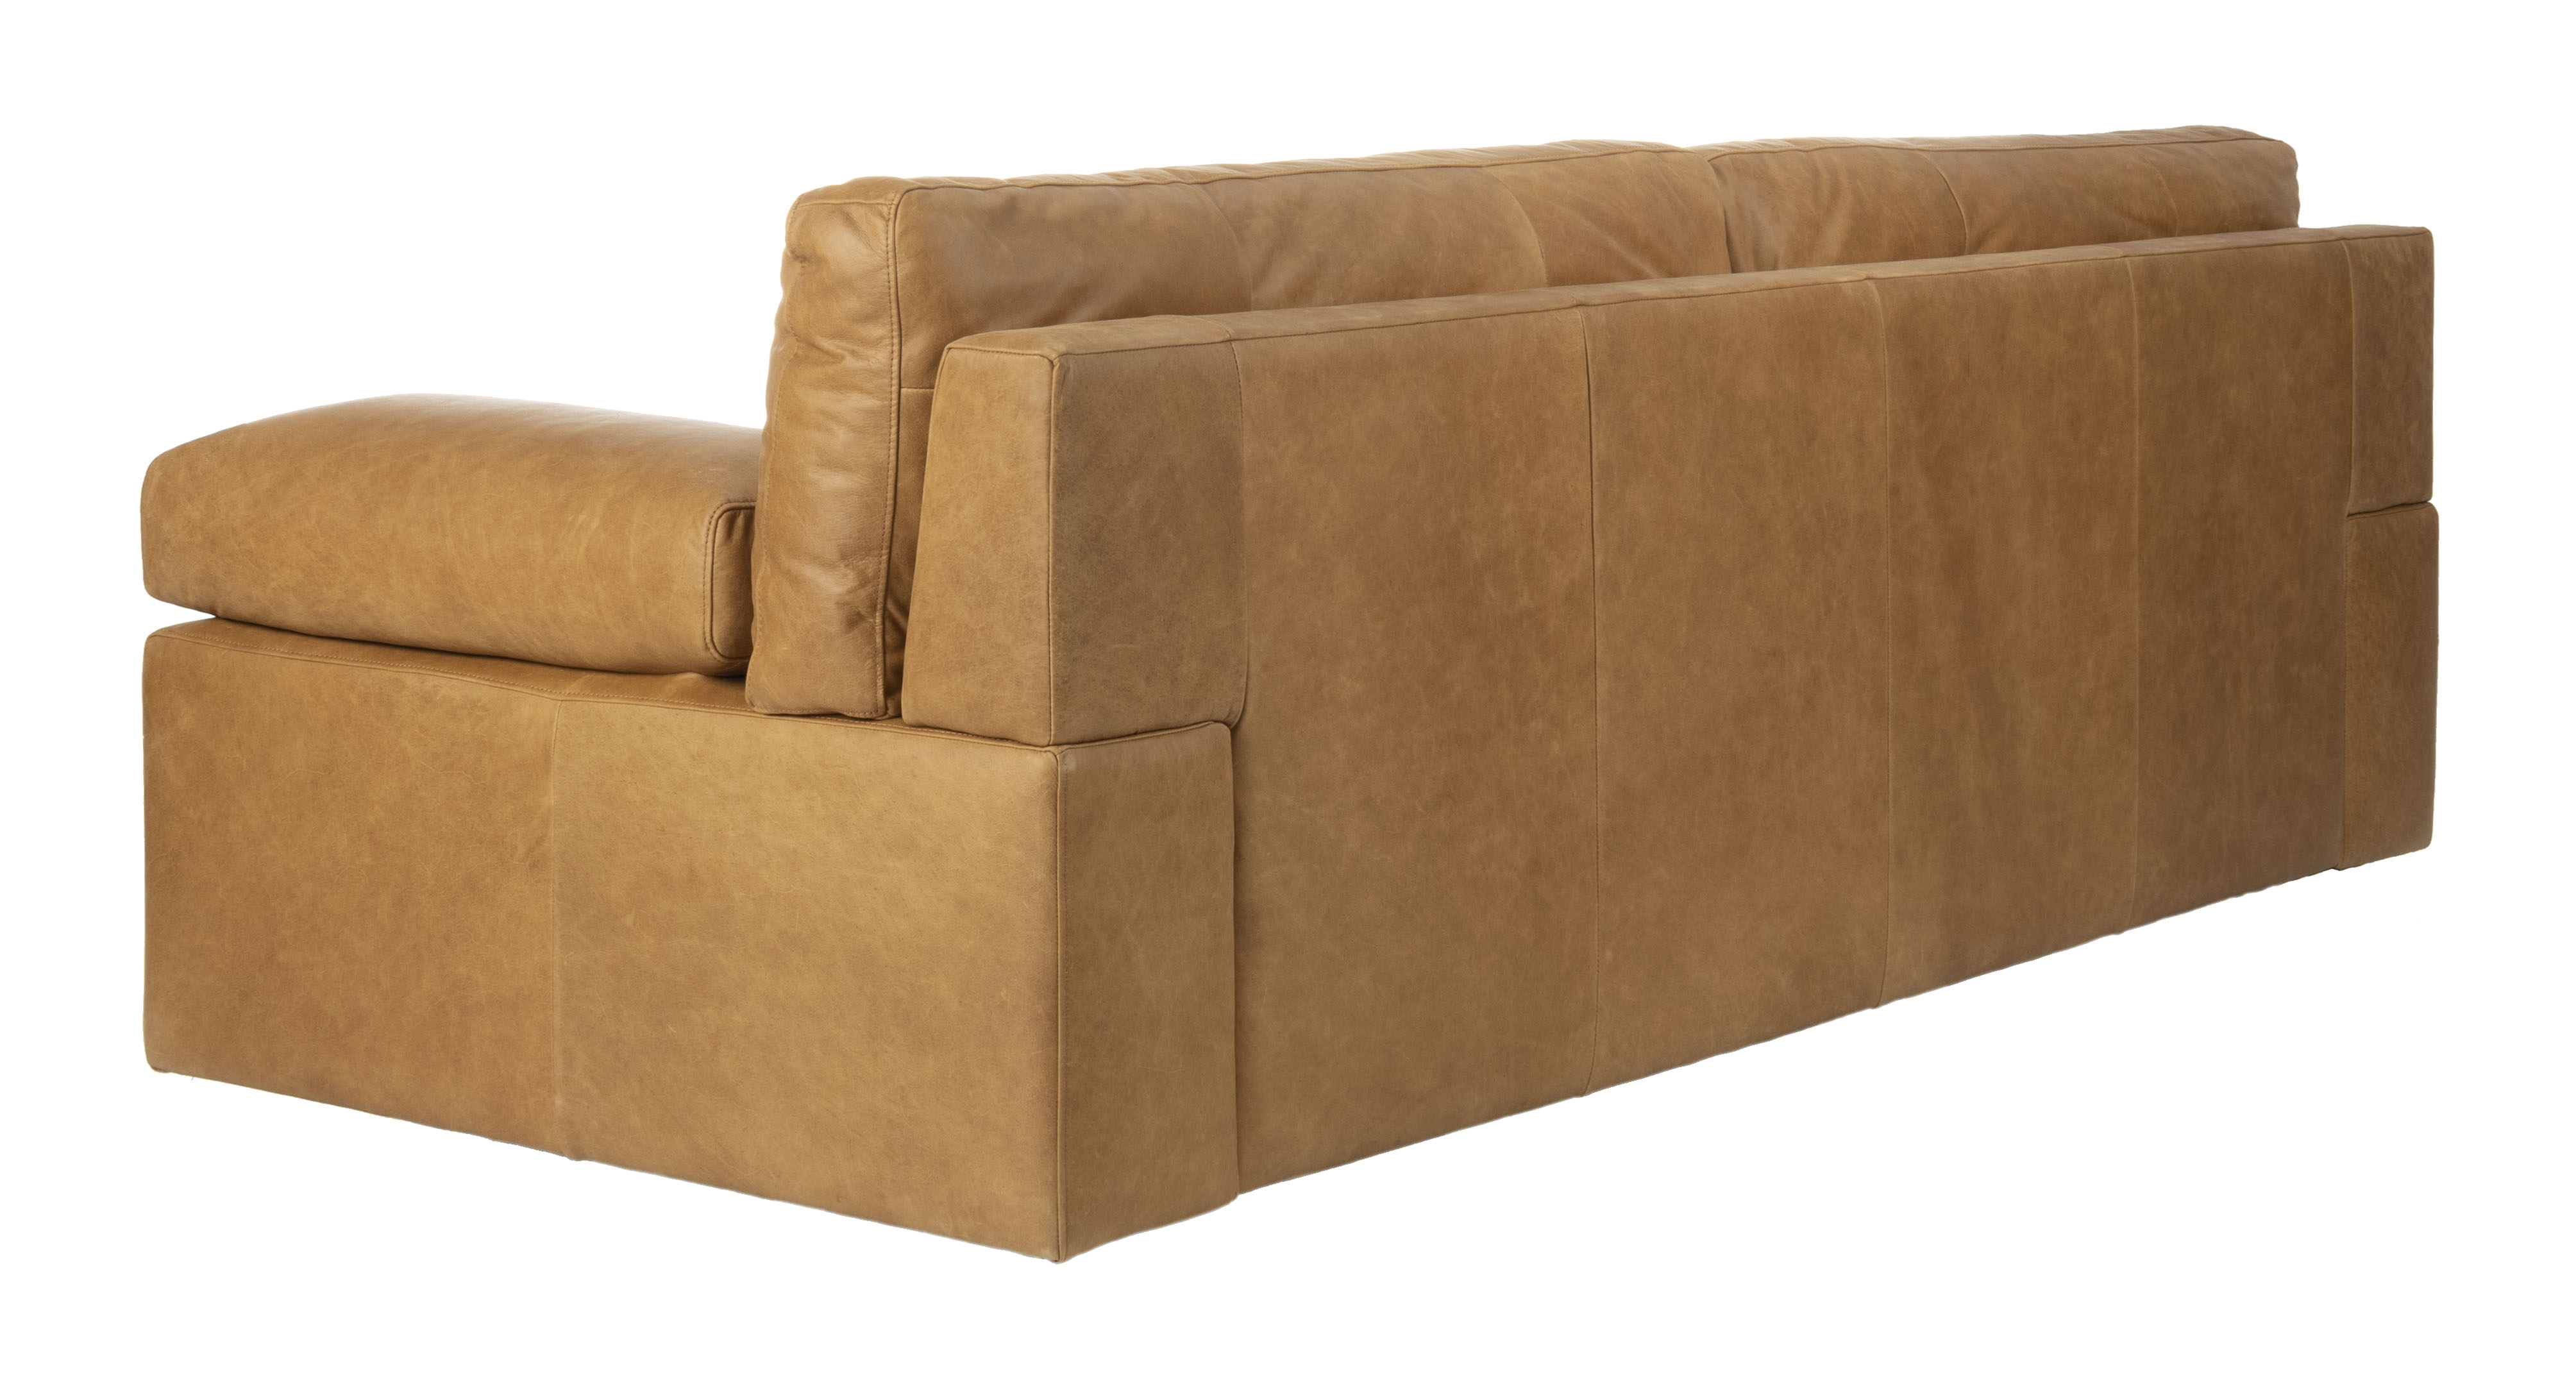 Sampson Italian Leather Sofa - Light Brown - Arlo Home - Image 4